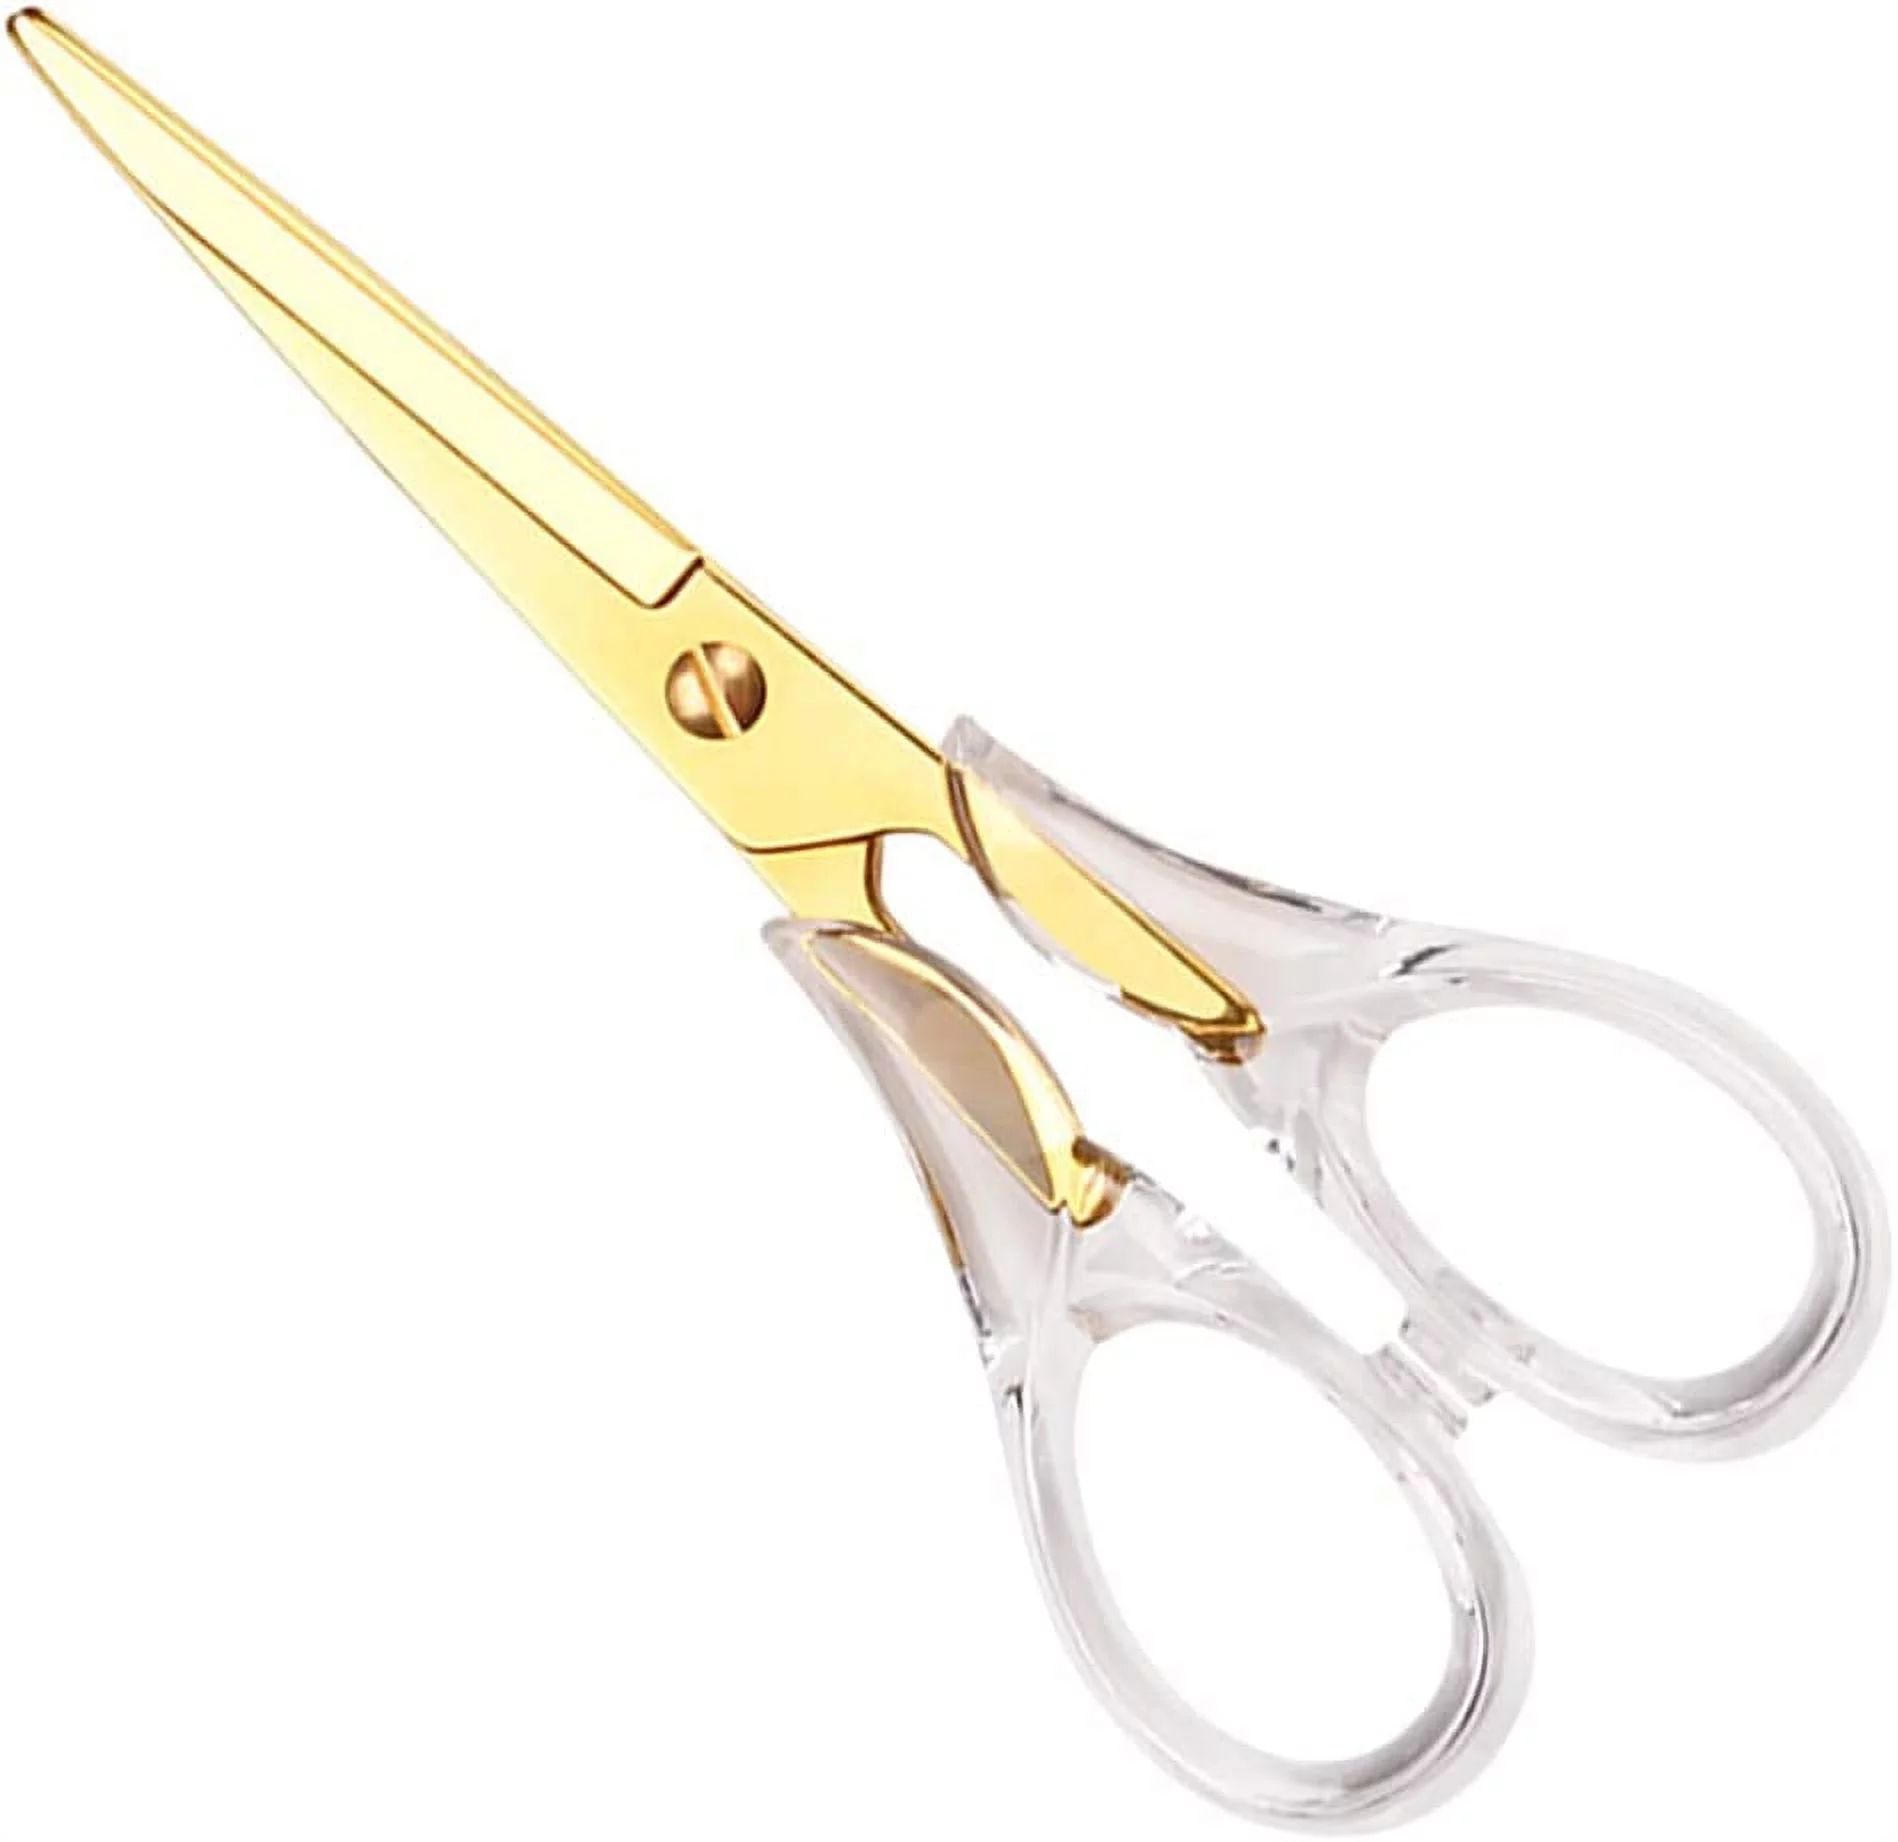 Creechwa Gold Acrylic Scissors, Stainless Steel Craft Scissors, Clear Stylish Scissors Stationery... | Walmart (US)